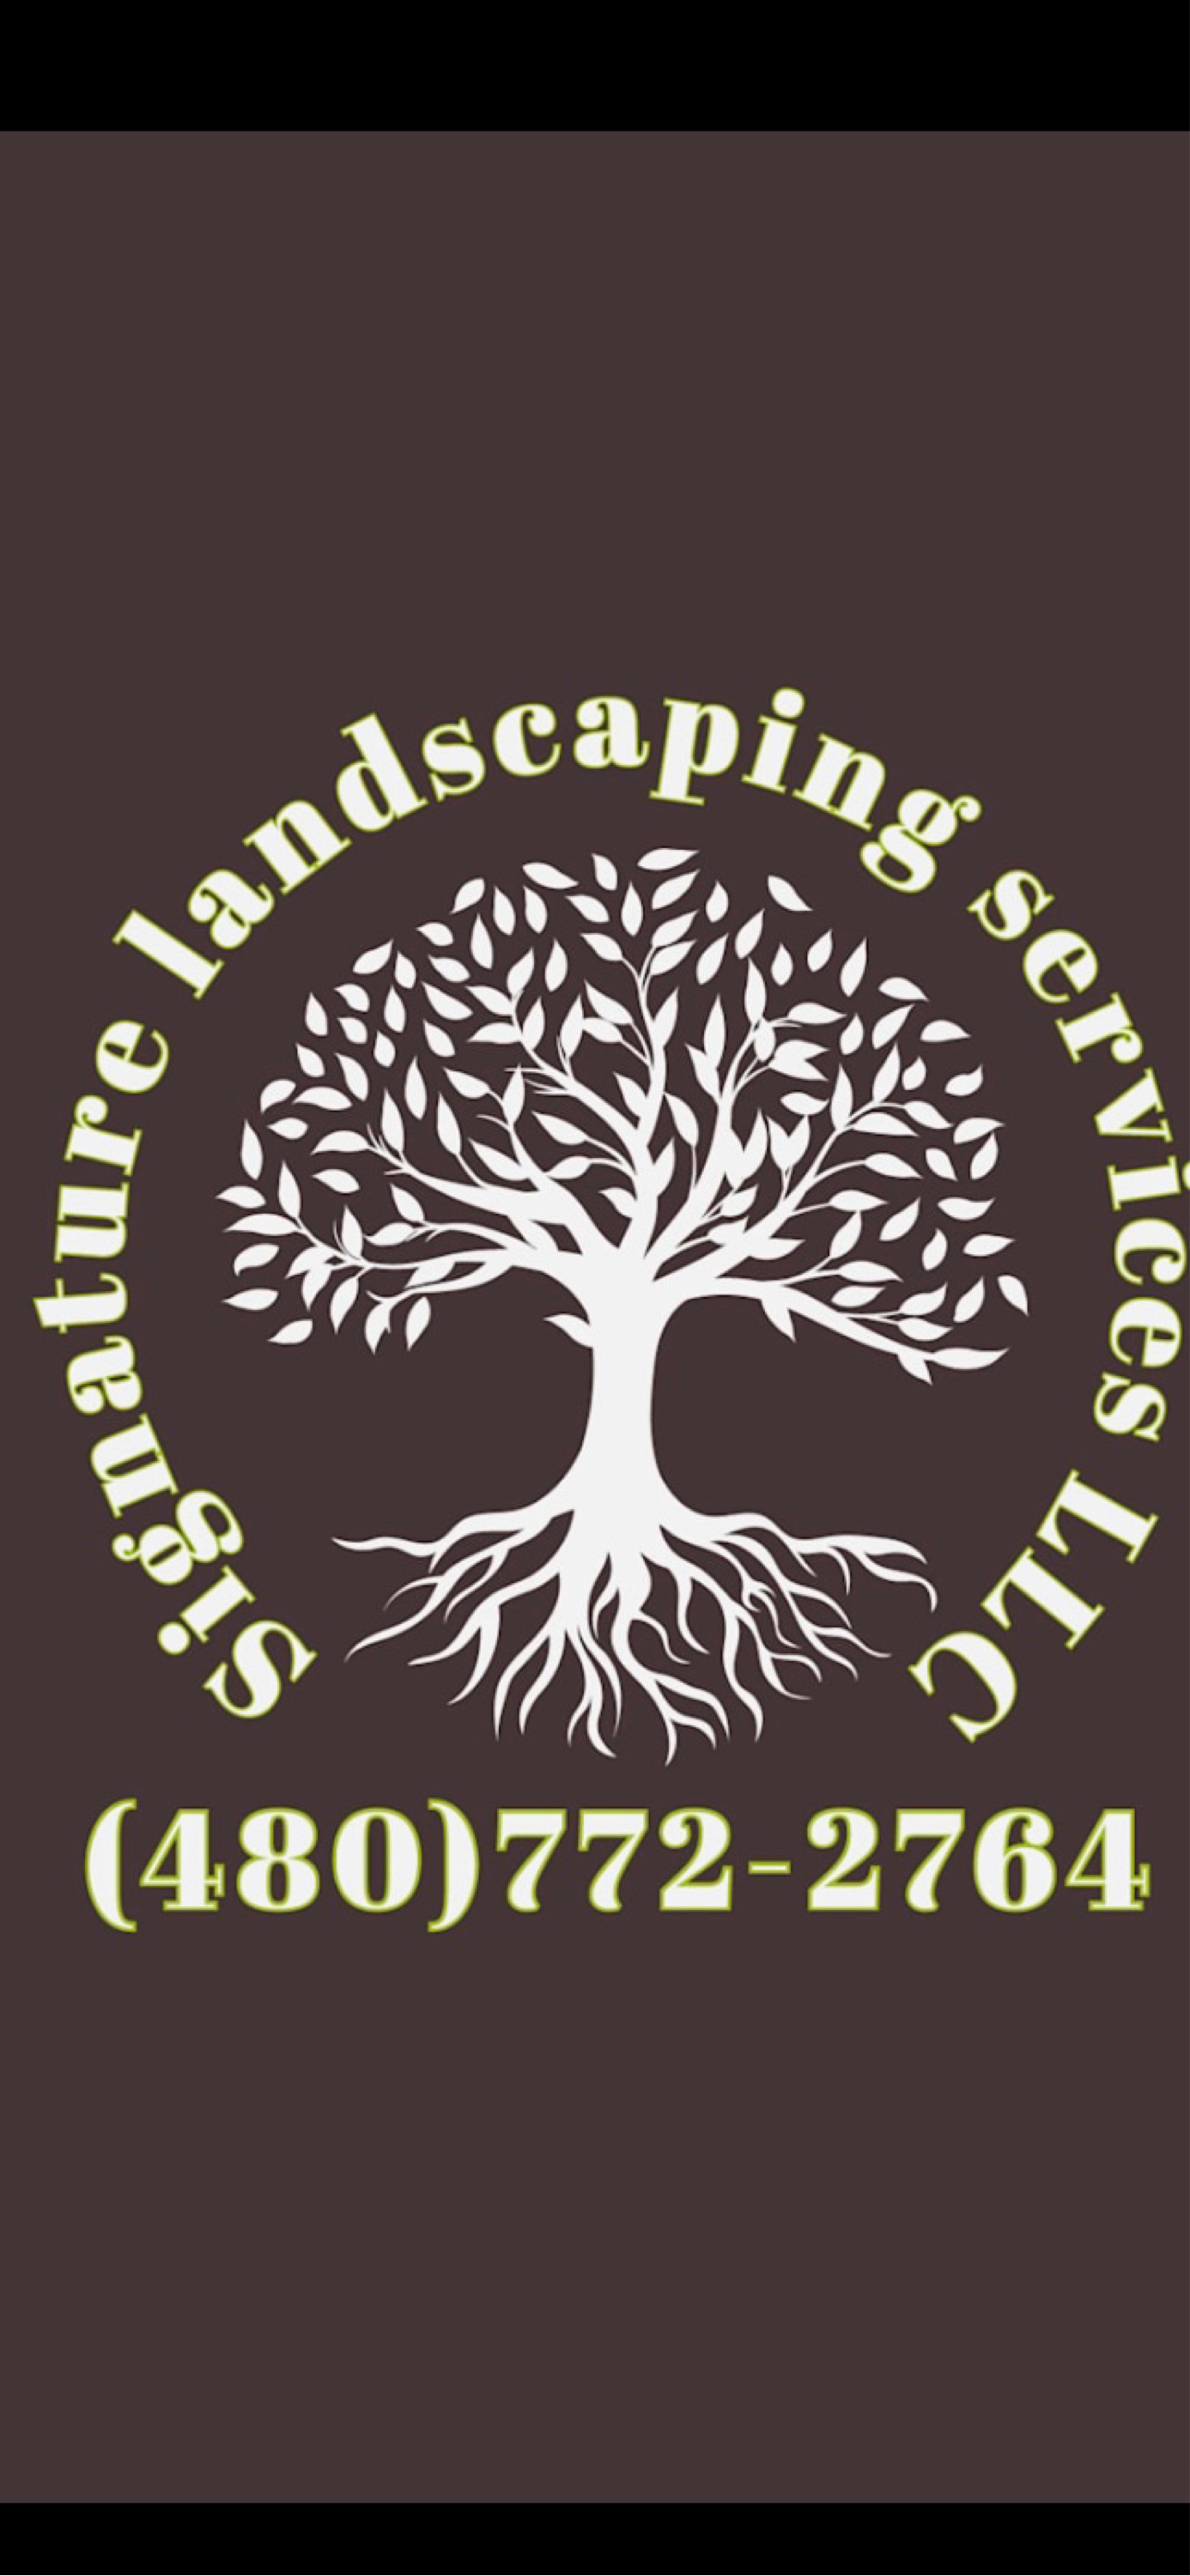 Signature Landscaping Services LLC Logo